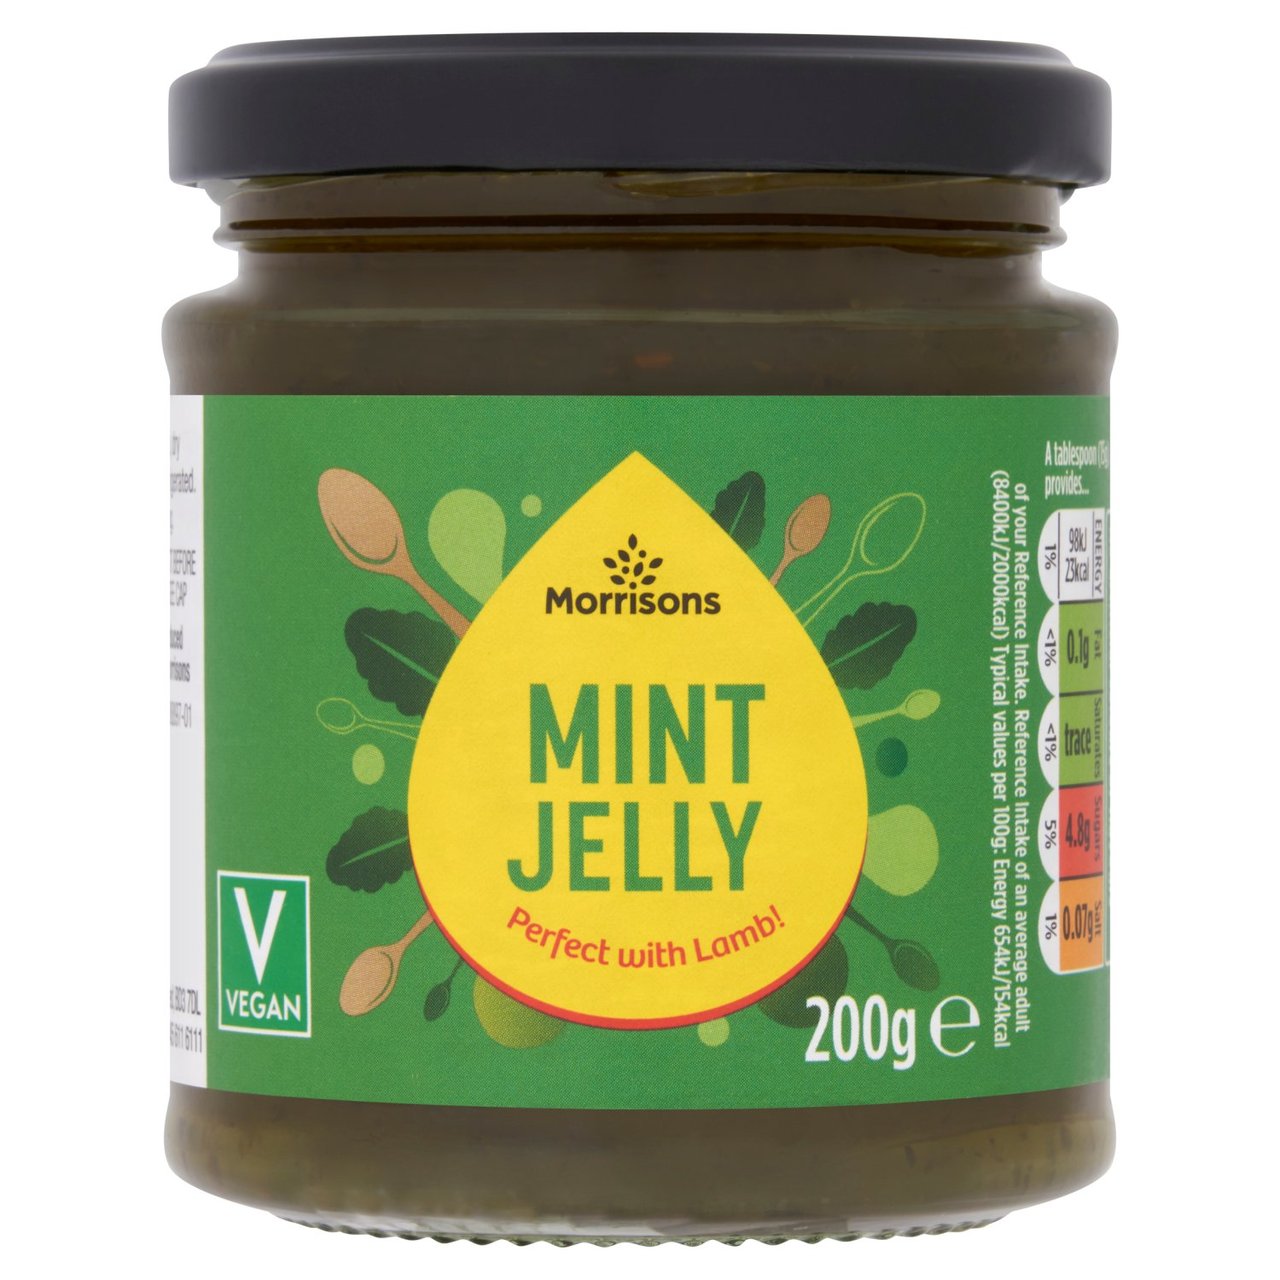 Morrisons Mint Jelly 200g